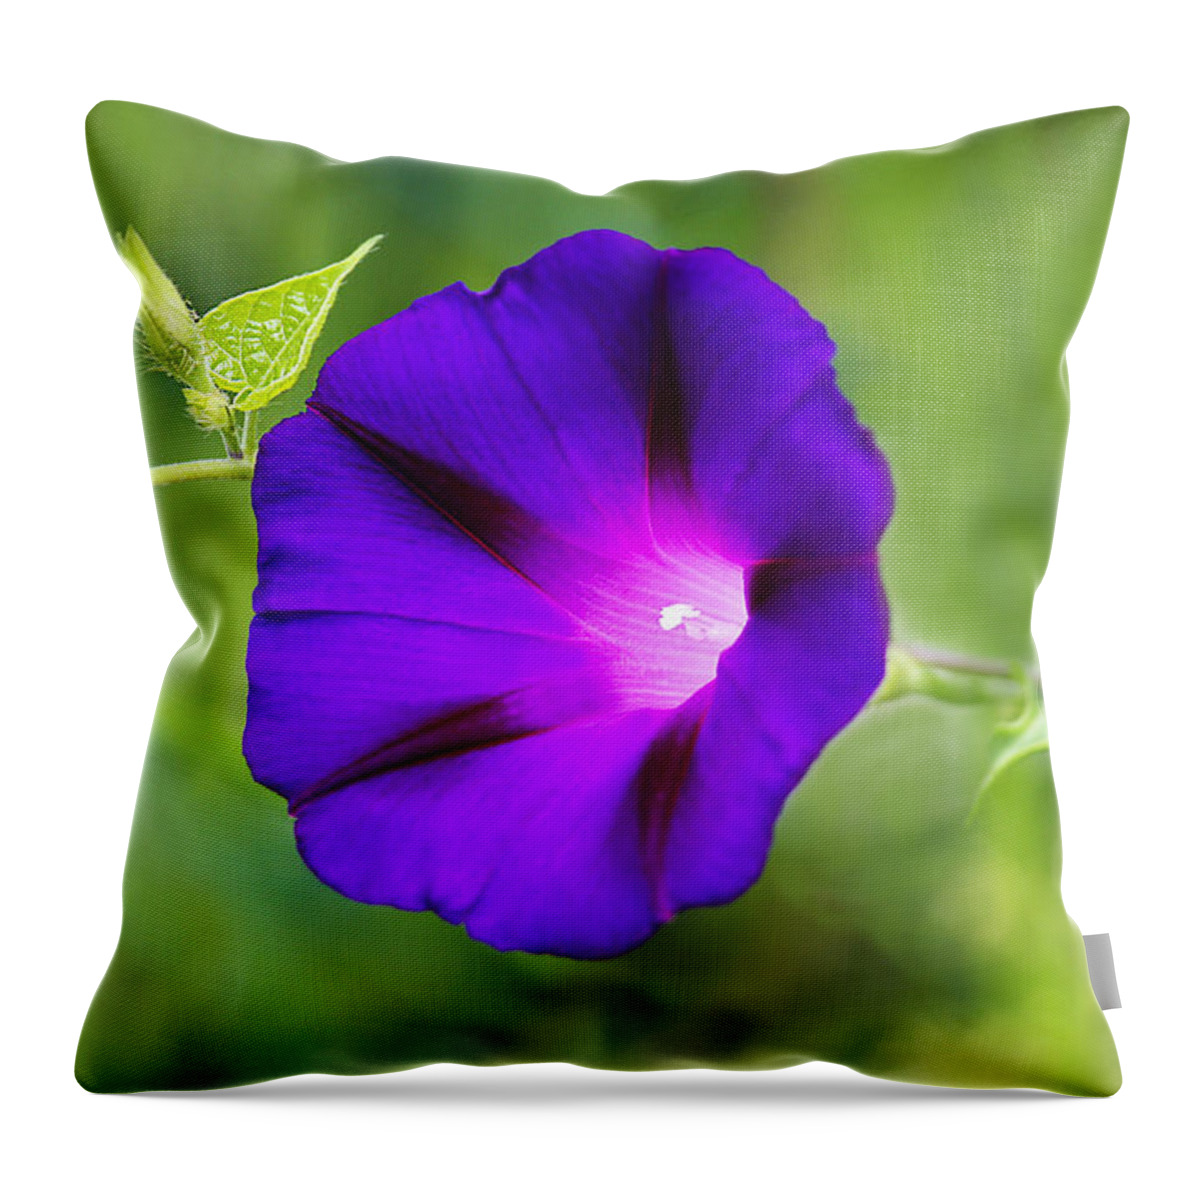 Purple Throw Pillow featuring the photograph Purple Morning Glory by Marina Kojukhova